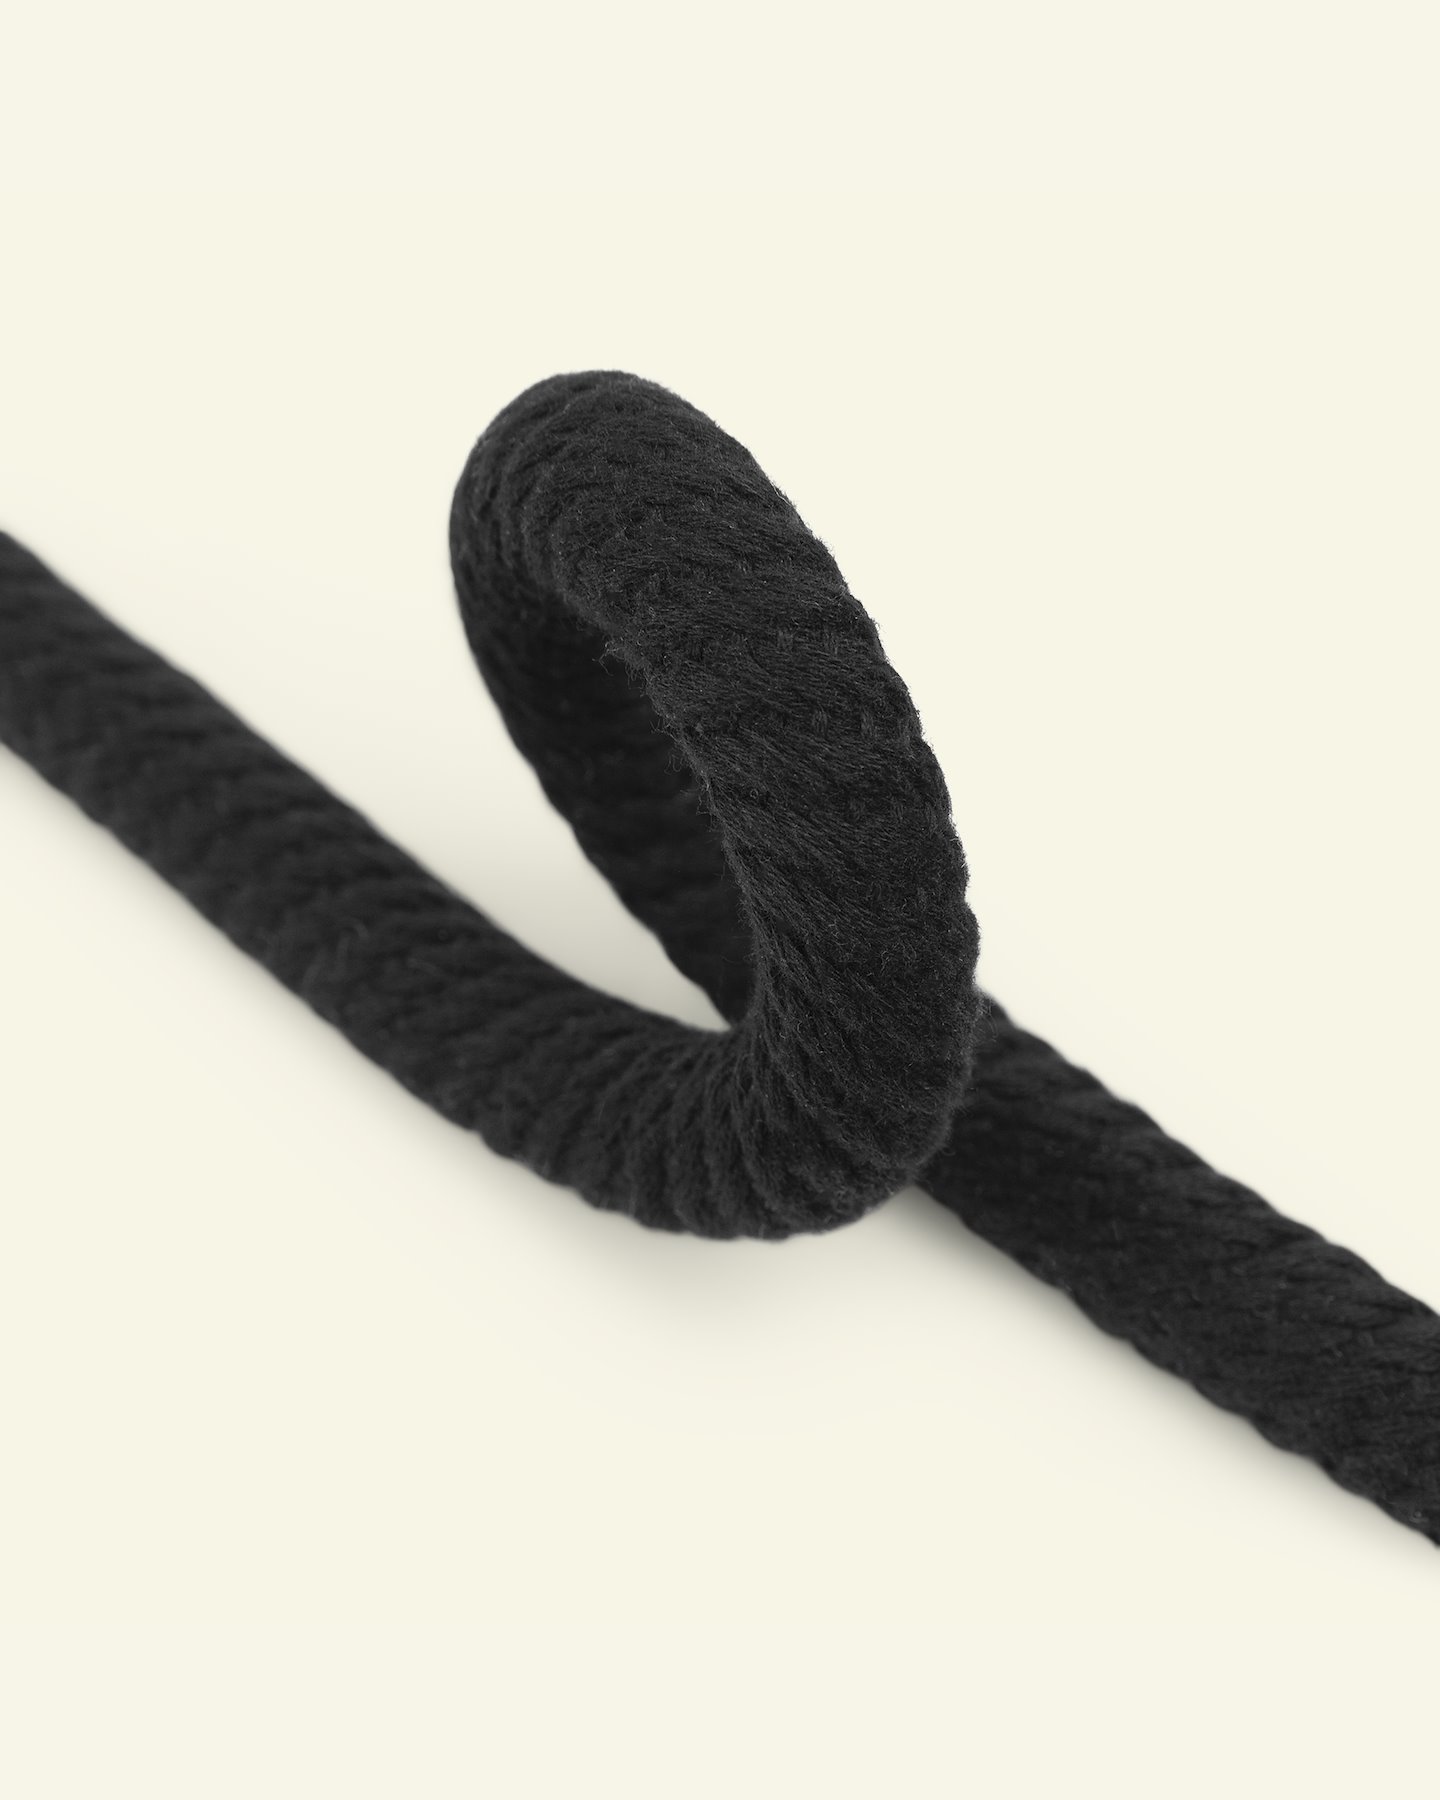 String/soft rope 12mm black 2m 74800_pack.png